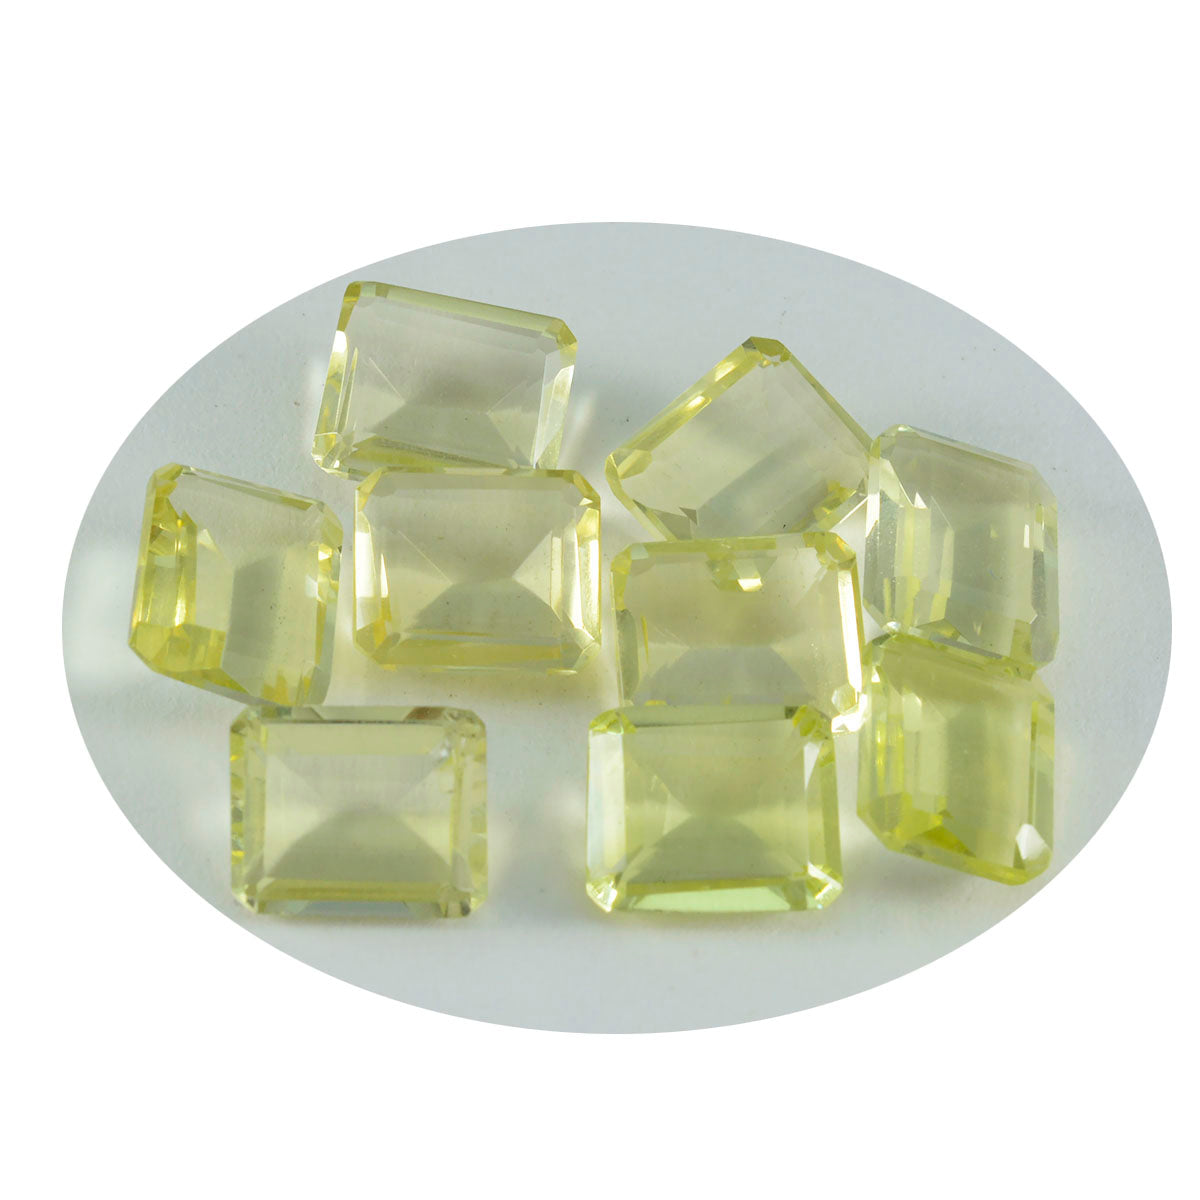 Riyogems 1PC Yellow Lemon Quartz Faceted 6x8 mm Octagon Shape A1 Quality Loose Gemstone